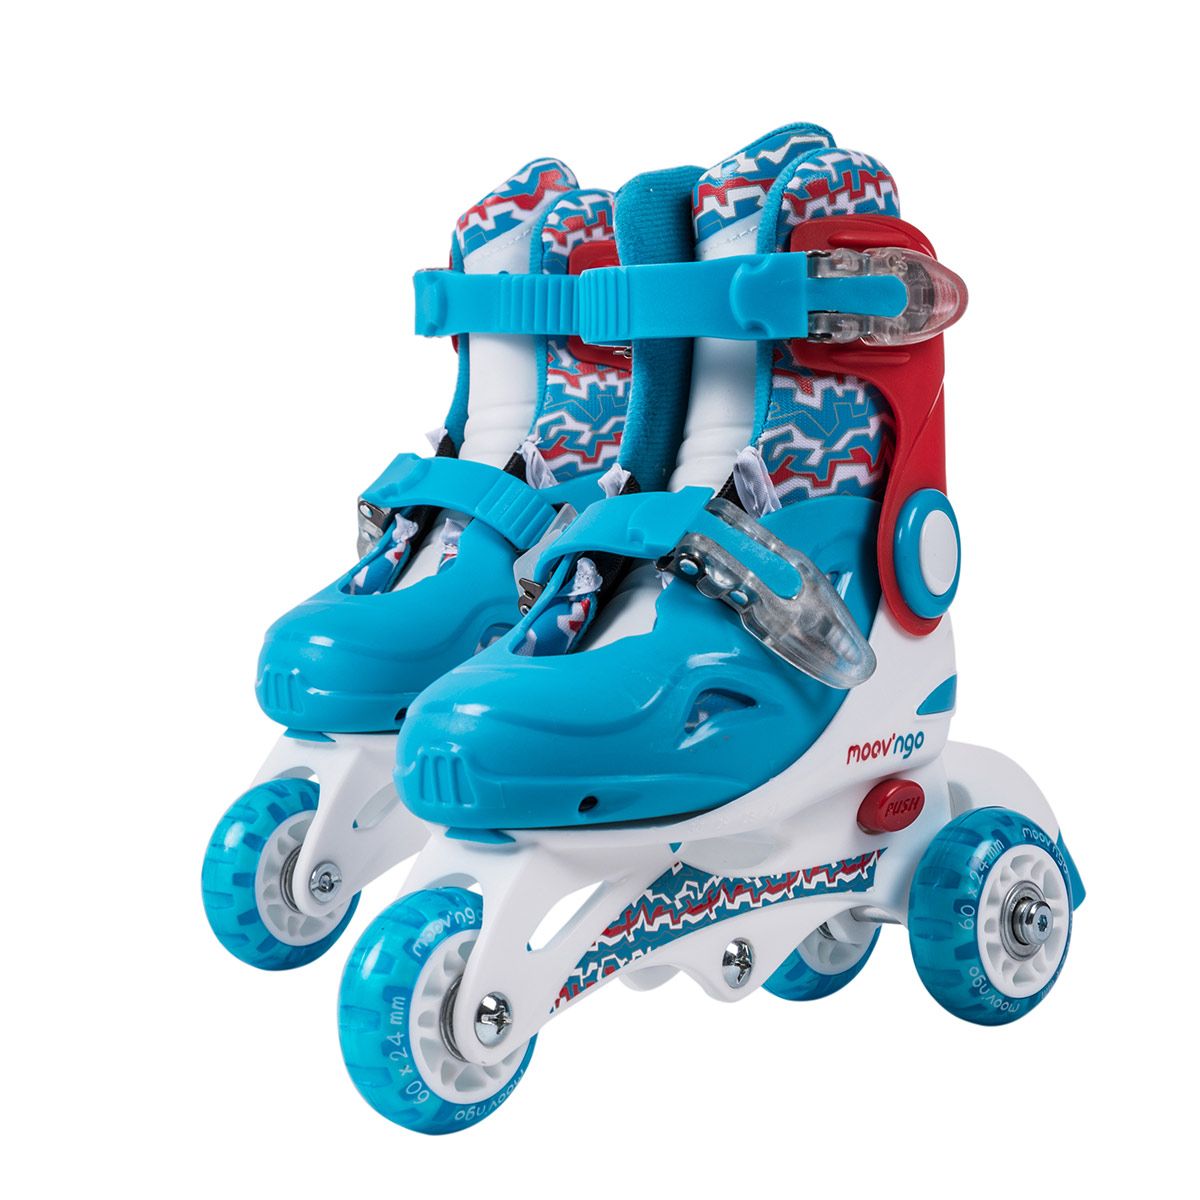 Rollers Evolutifs 2 en 1 La reine des Neiges Mondo, 3 roues - Roller enfant